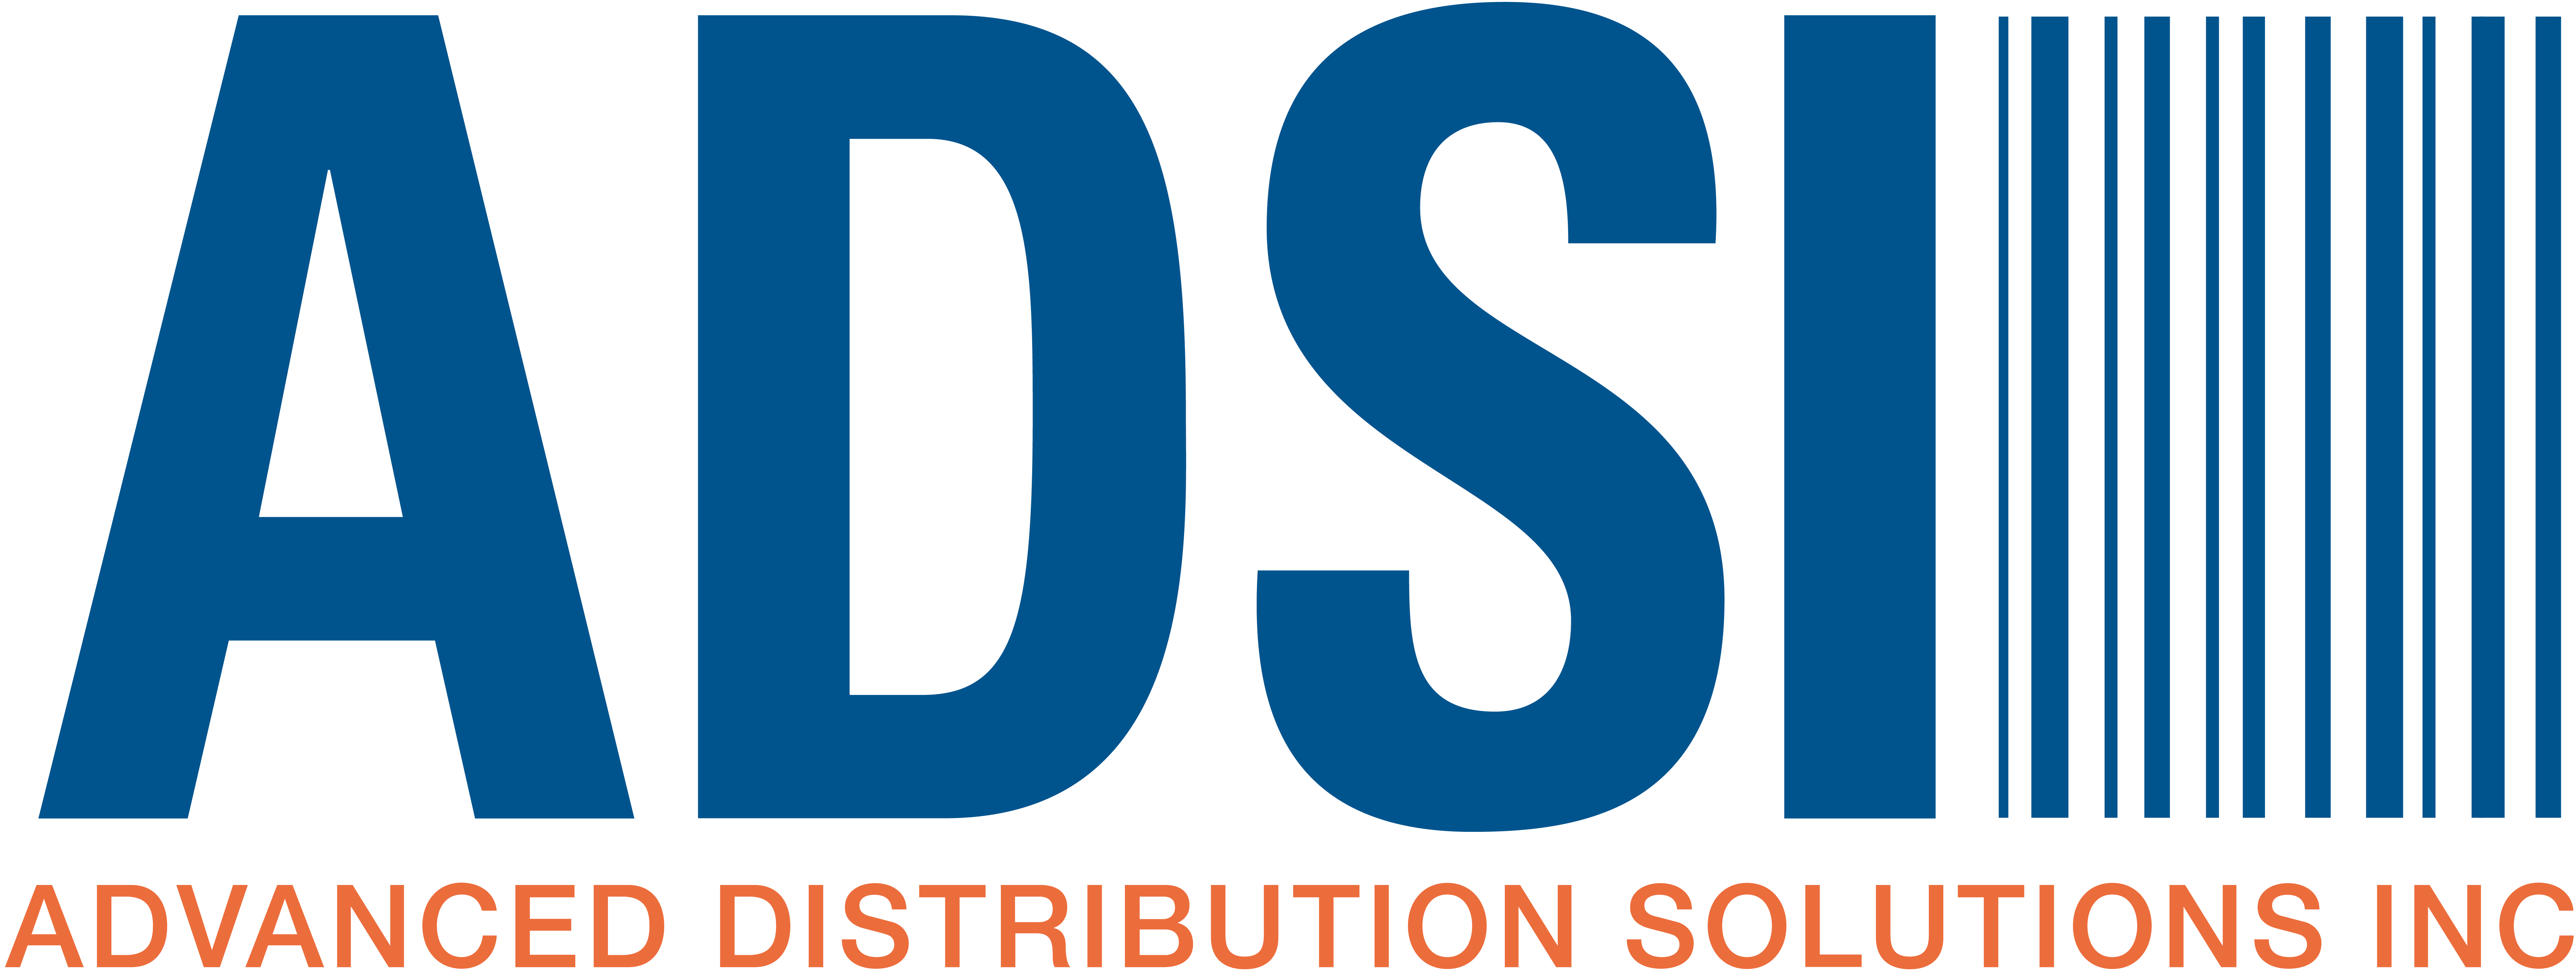 Advanced distribution solutions inc logo